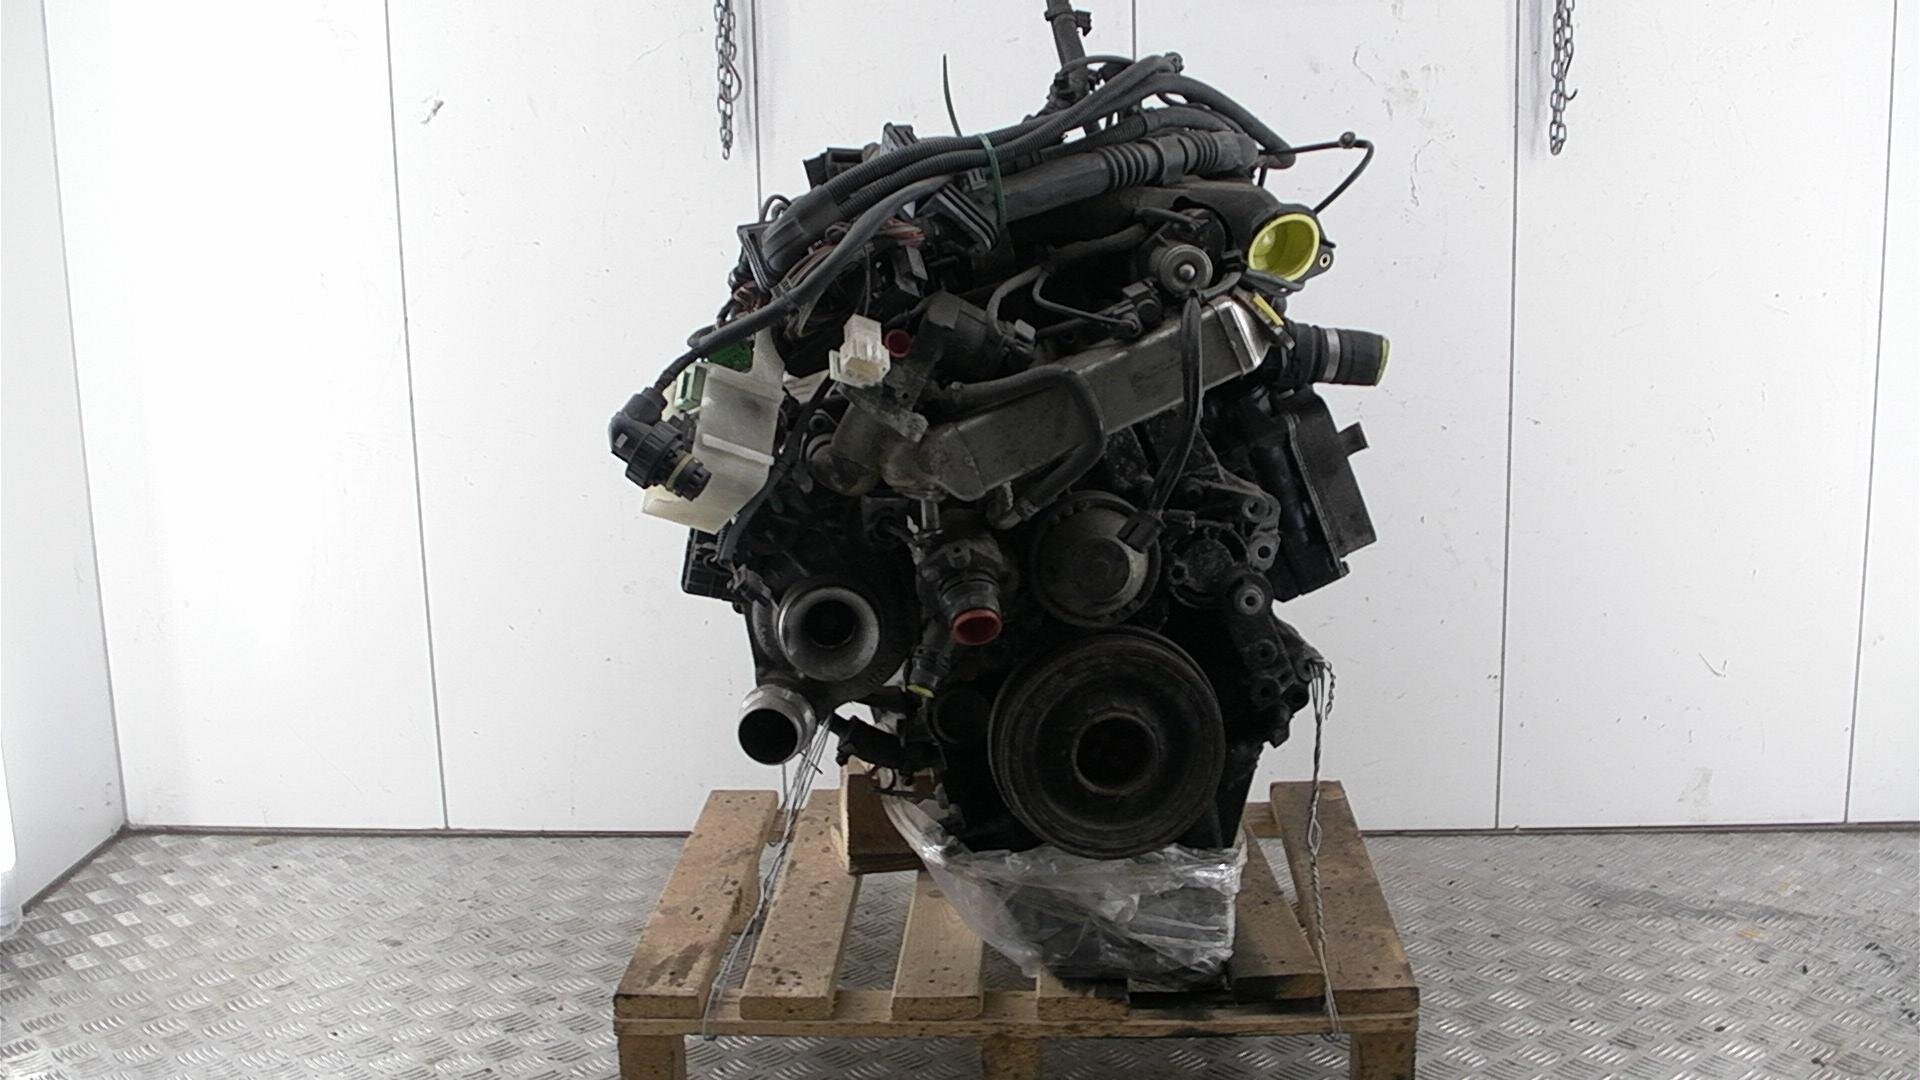 Global EU autoteile, Motor und Zubehör, Komplette Motoren, Motor komplet BMW  X3 E83 2.0 D M47T 140 TYS.KM